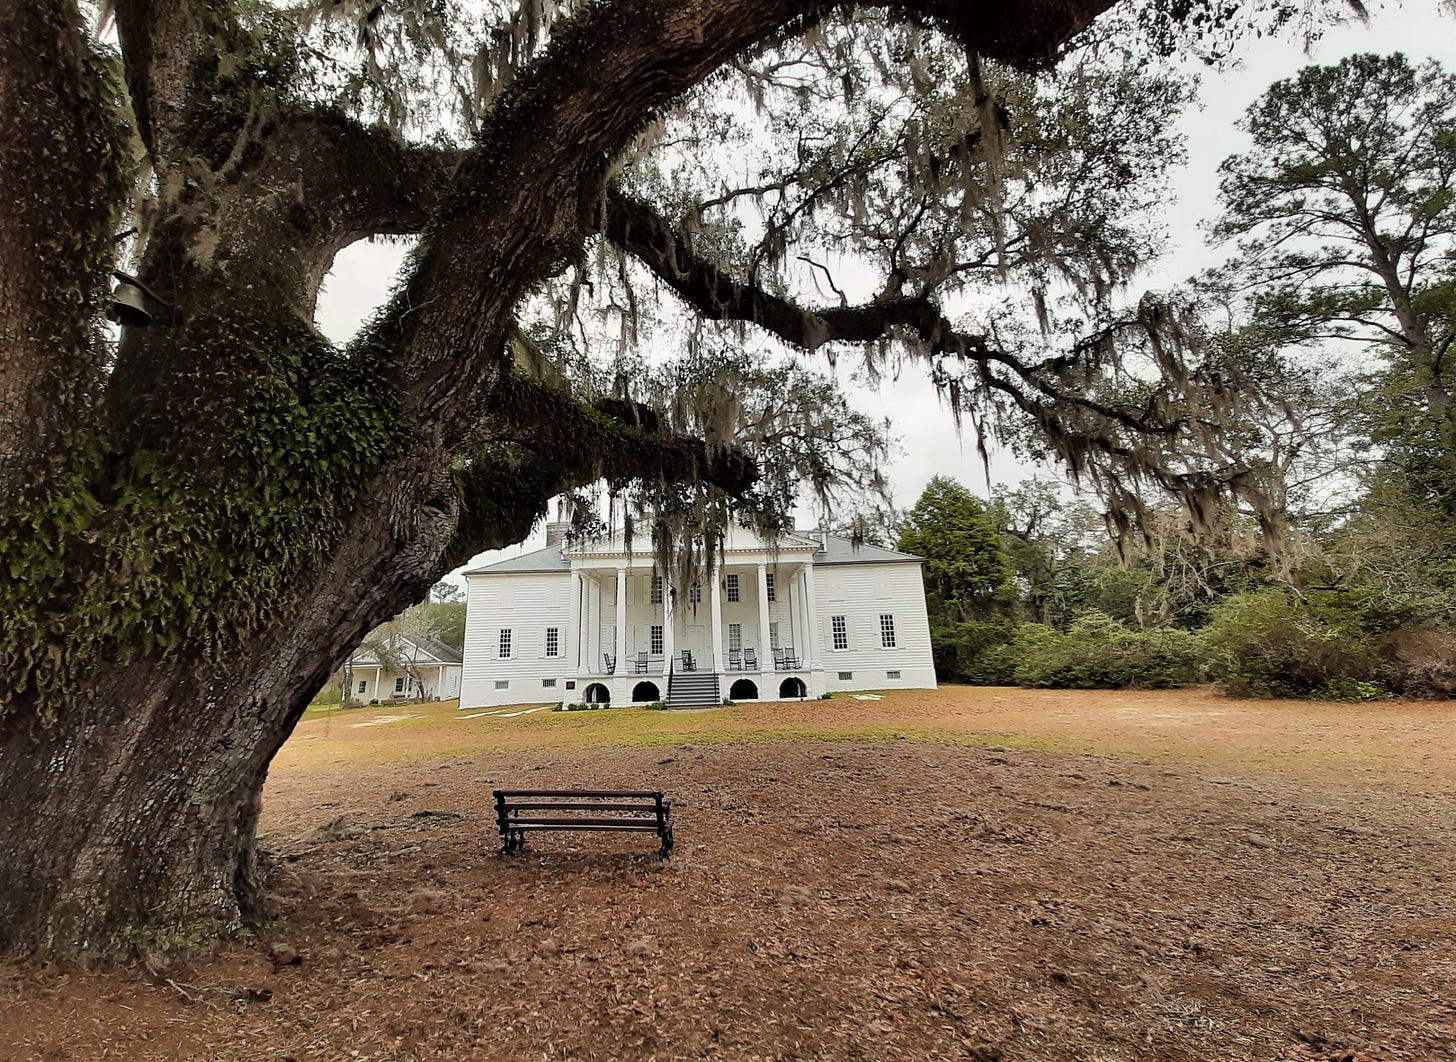 The Washington Oak still stands at Hampton Plantation.